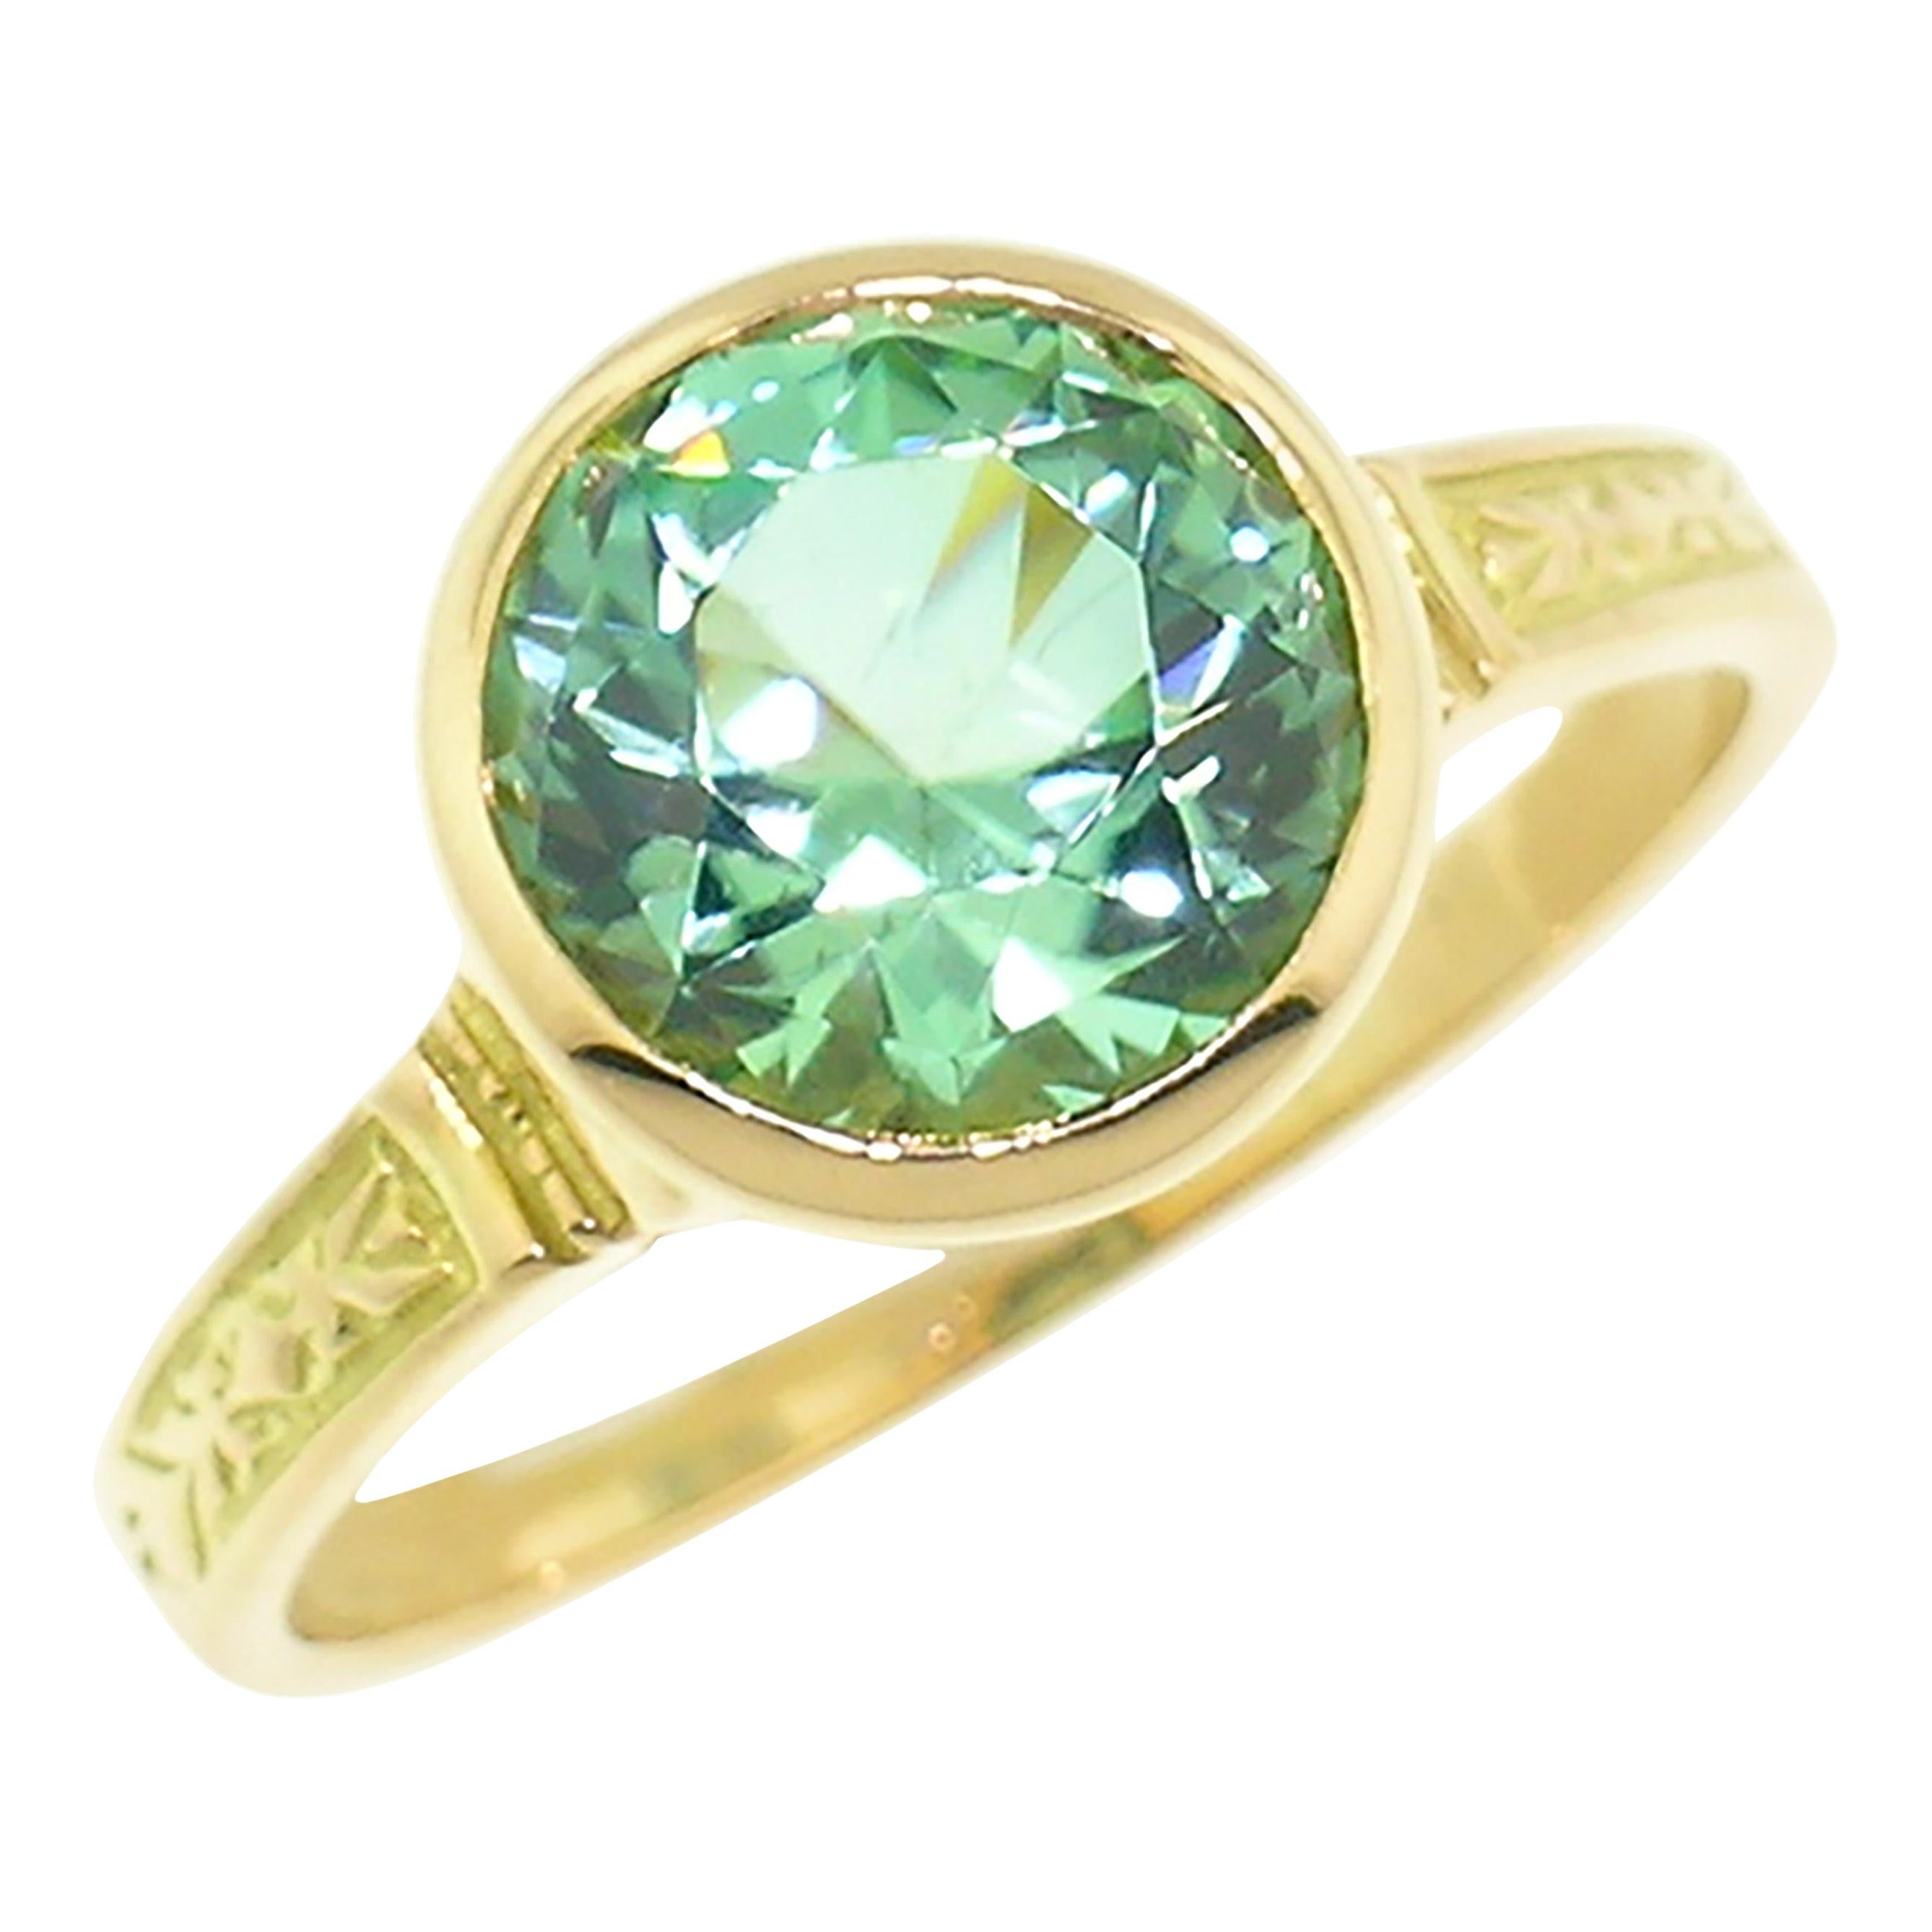 2.40ct Mint Green Tourmaline in 18kt Cassandra Ring by Cynthia Scott Jewelry